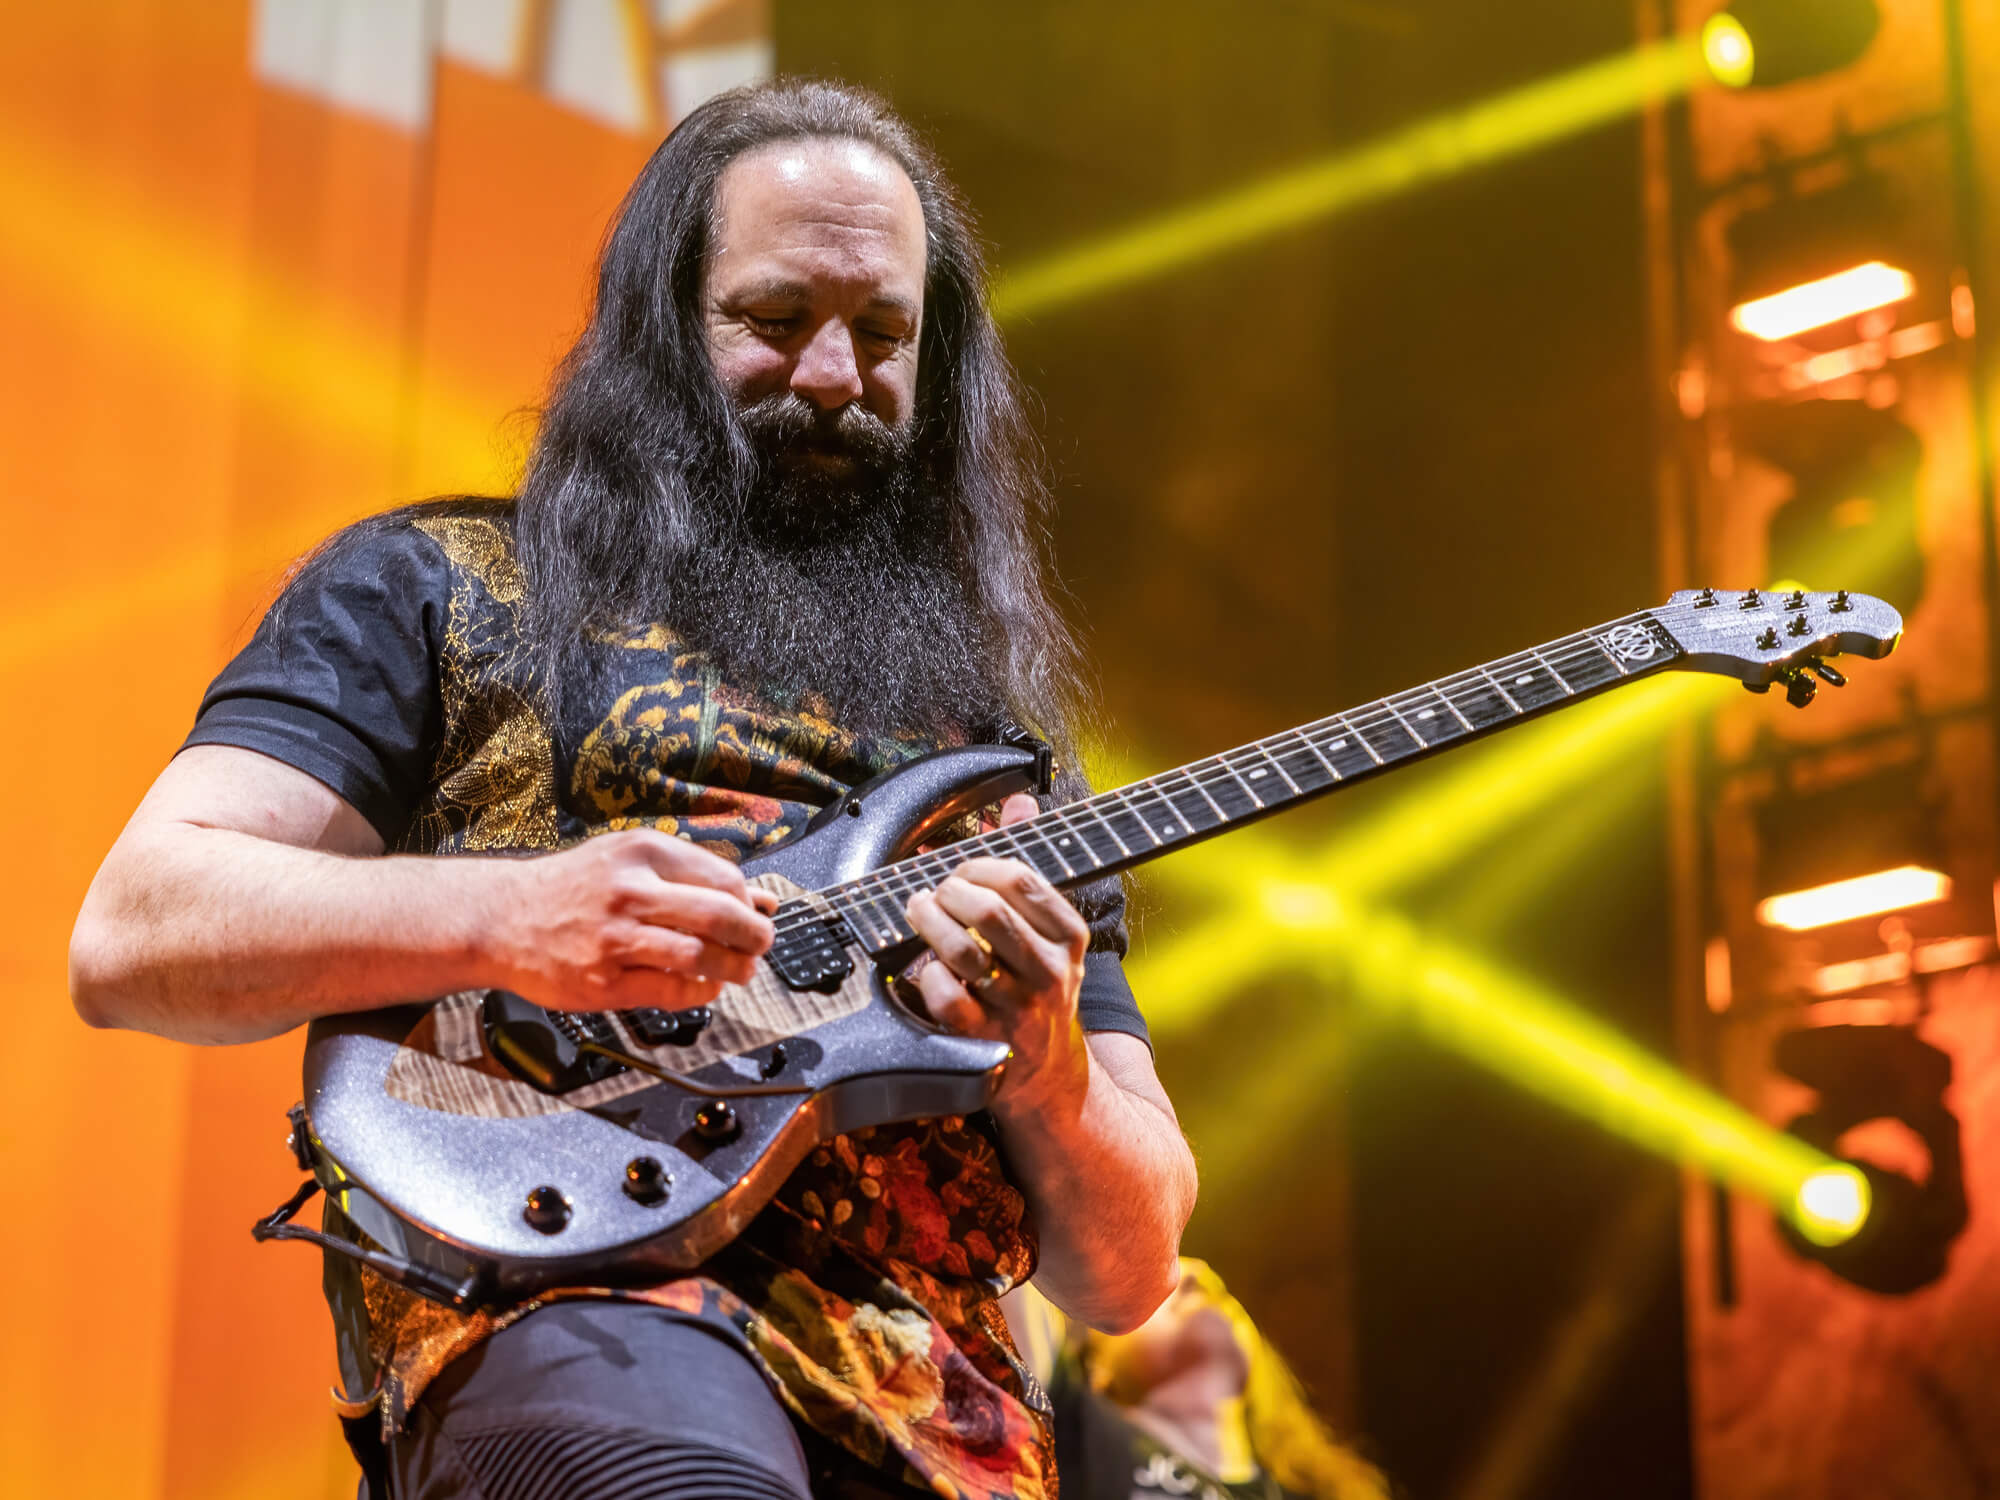 John Petrucci playing his guitar